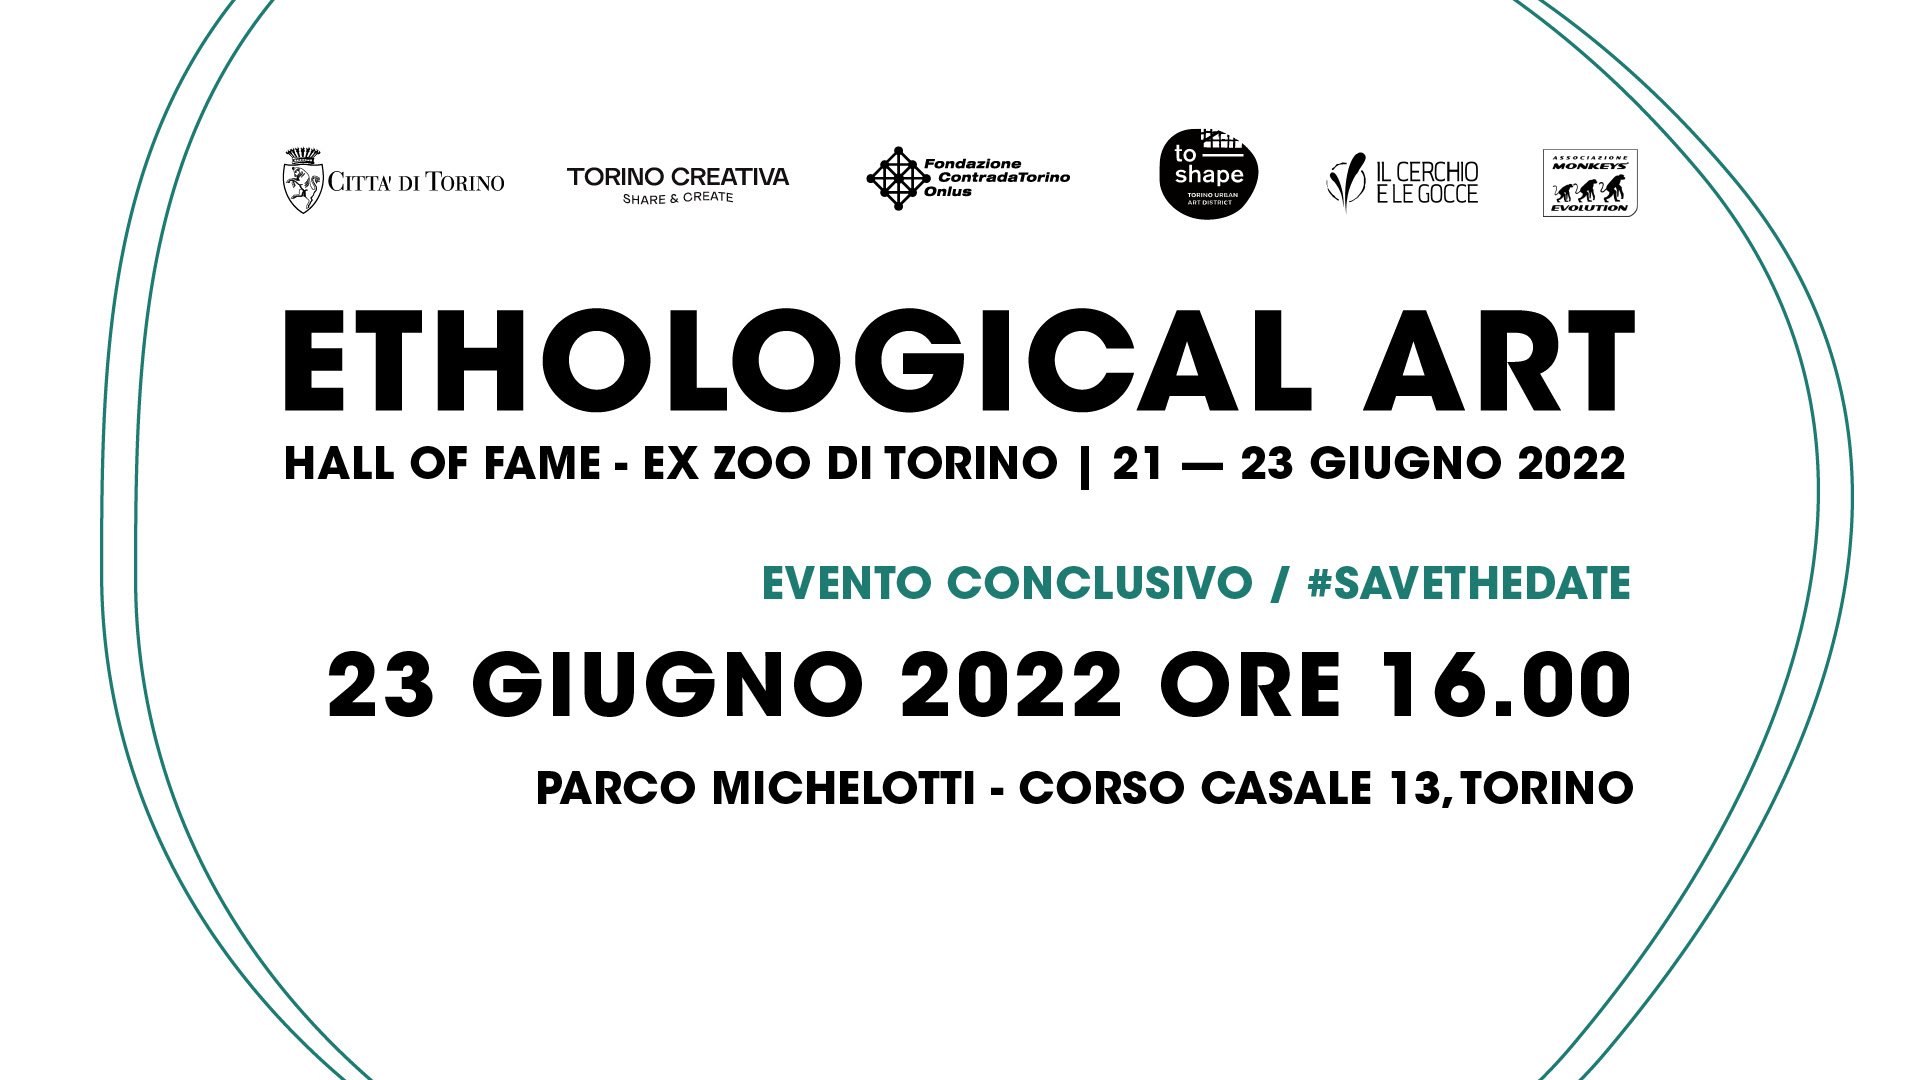 Ethological art – Hall of Fame ex zoo di Torino”